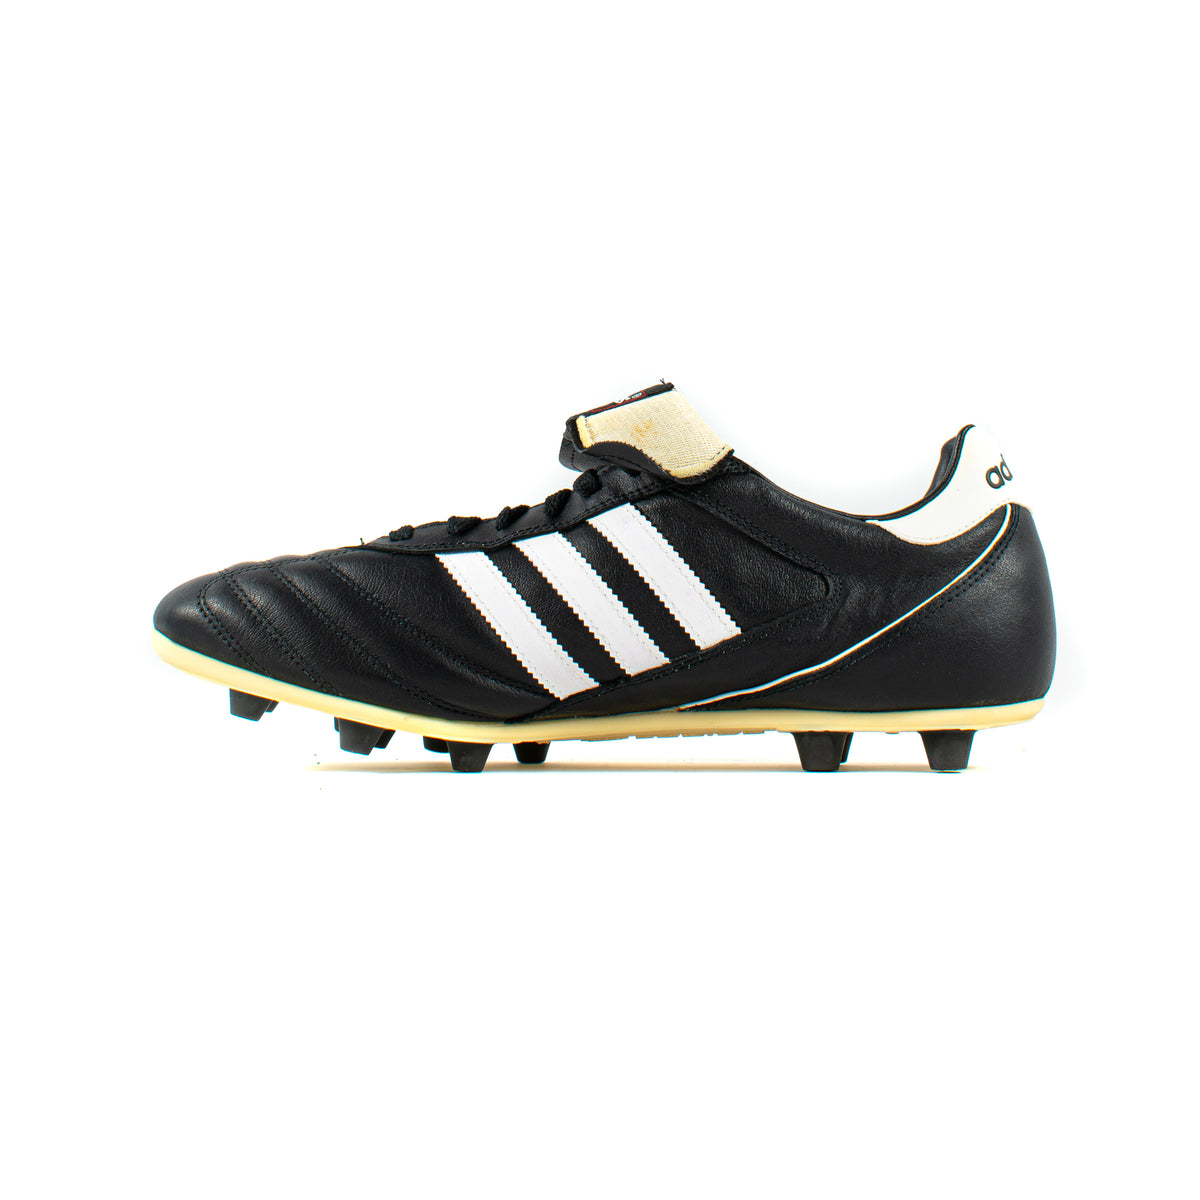 Adidas 5 FG – Classic Soccer Cleats